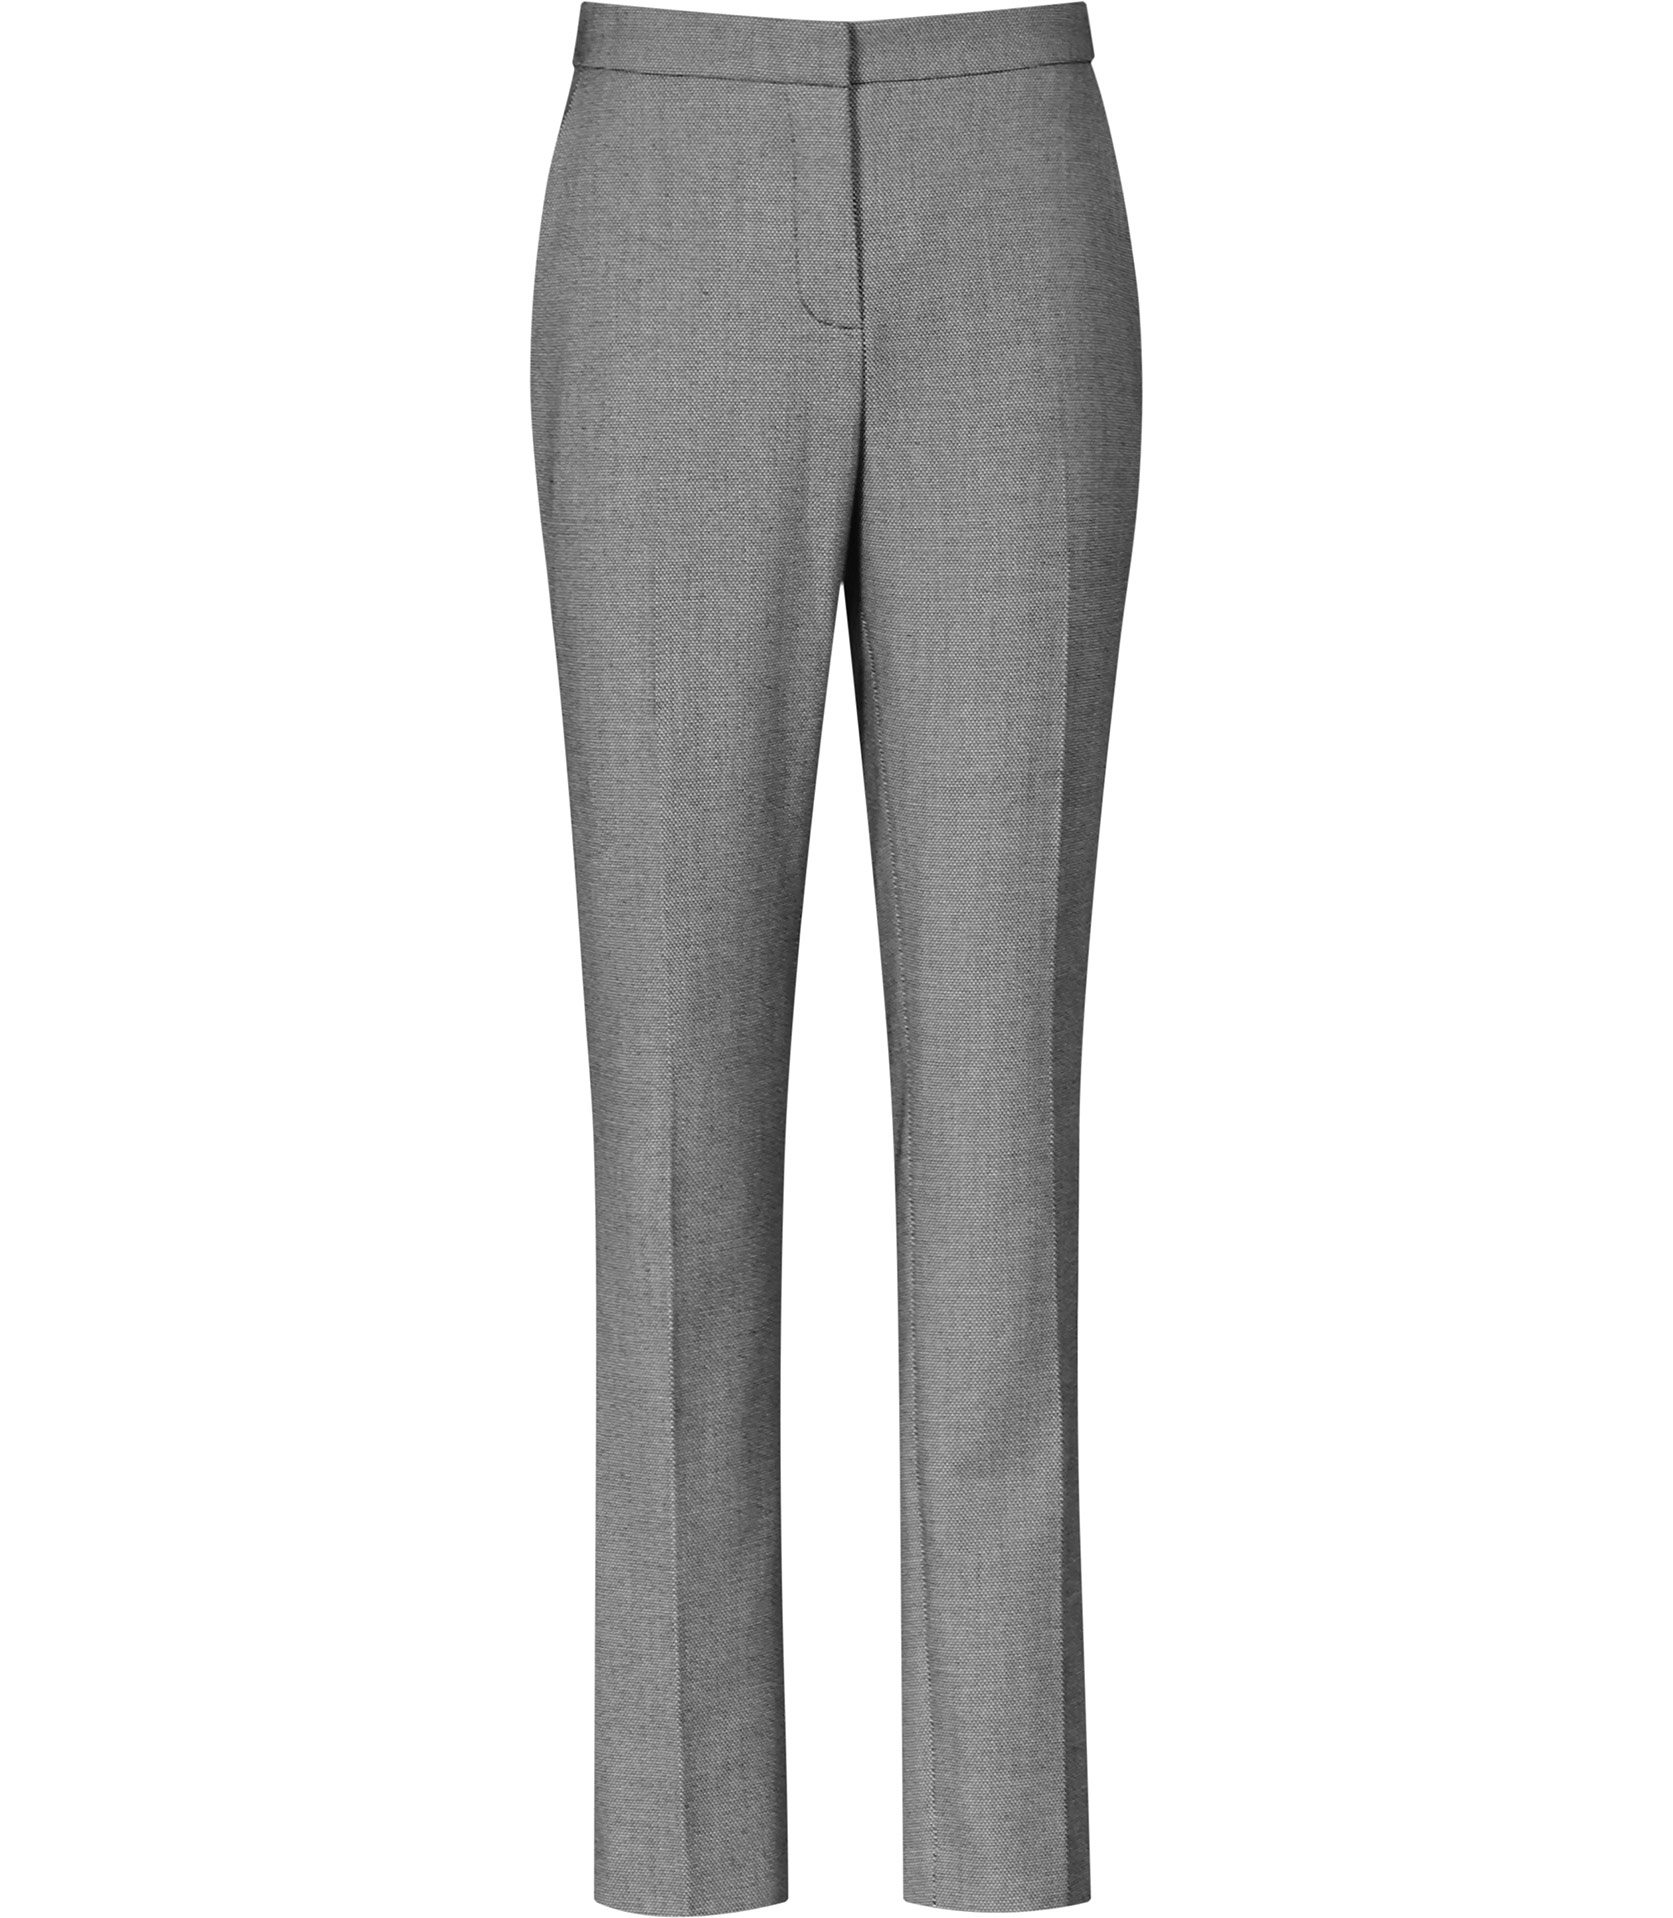 Reiss Andie Slim Tailored Trousers in Grey (Gray) - Lyst